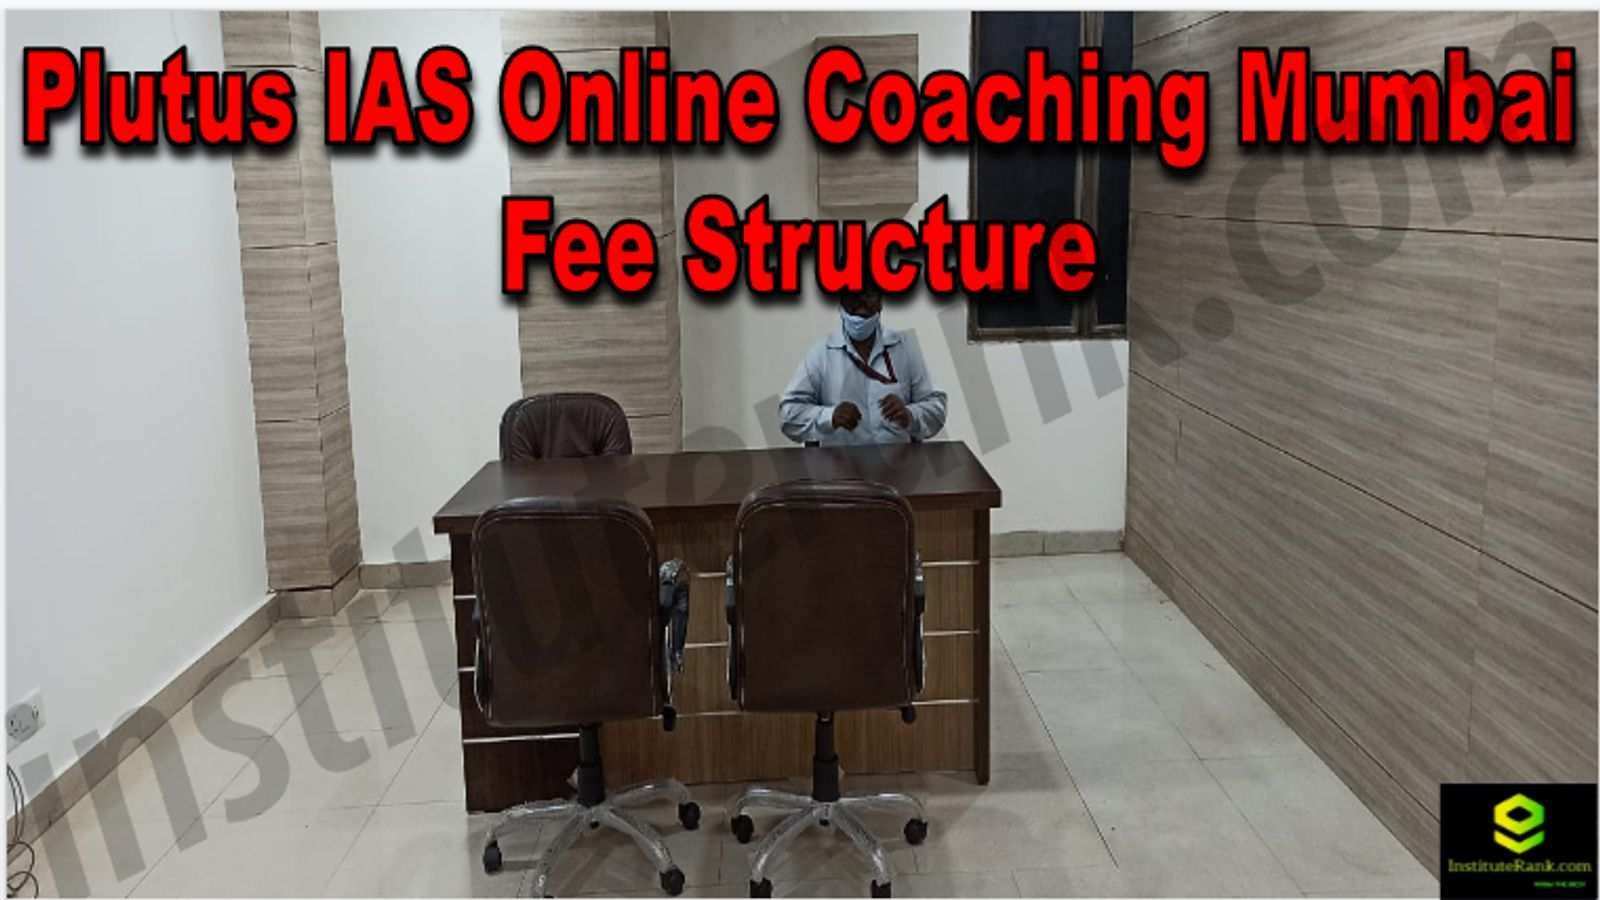 Plutus IAS Online Coaching Mumbai Reviews Fee structure